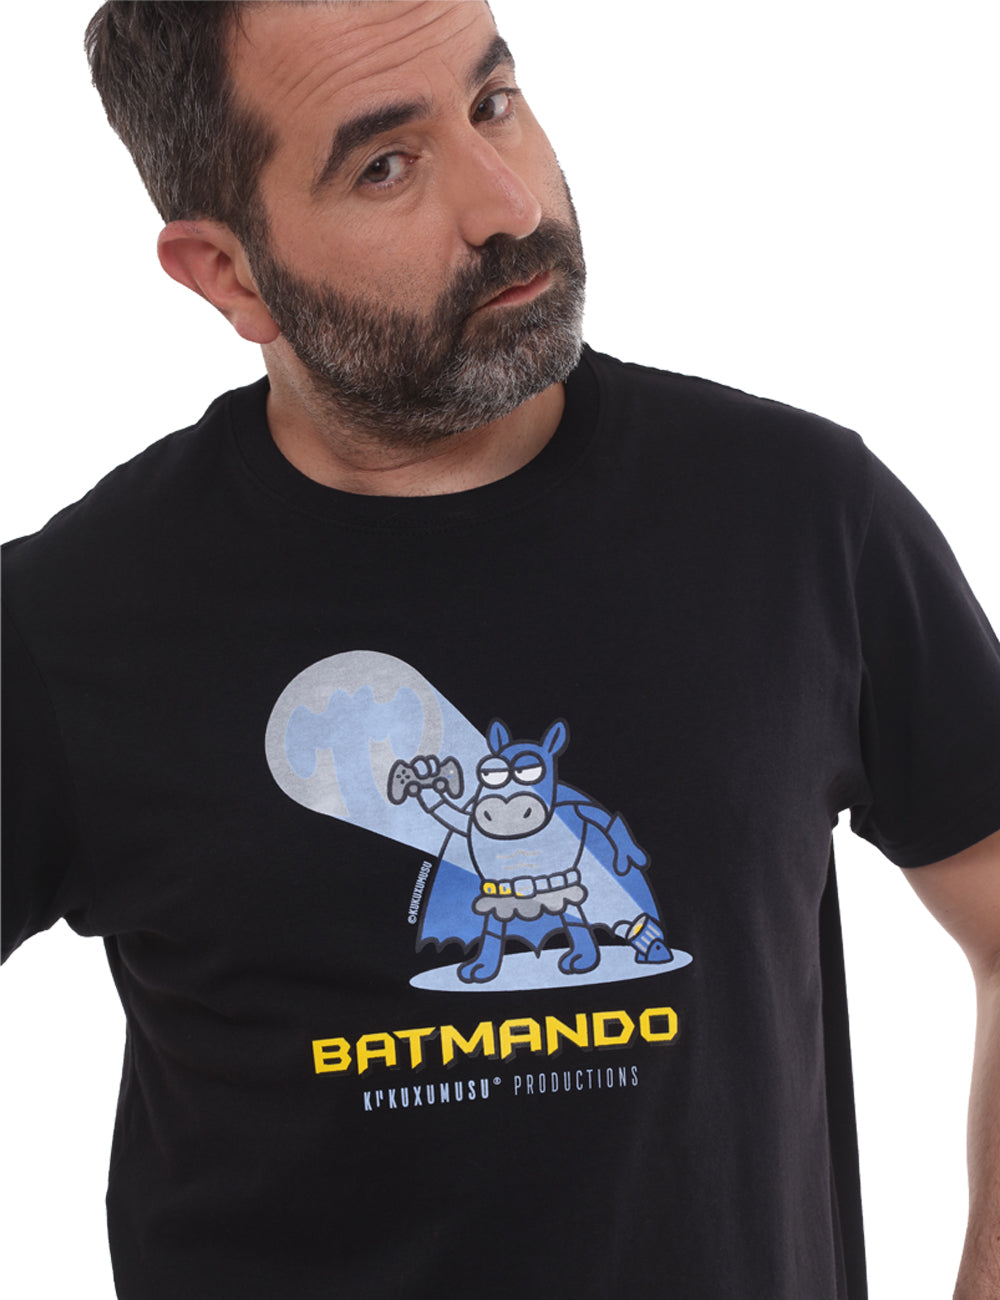 Kukuxumusu Mens T-Shirt Batmando